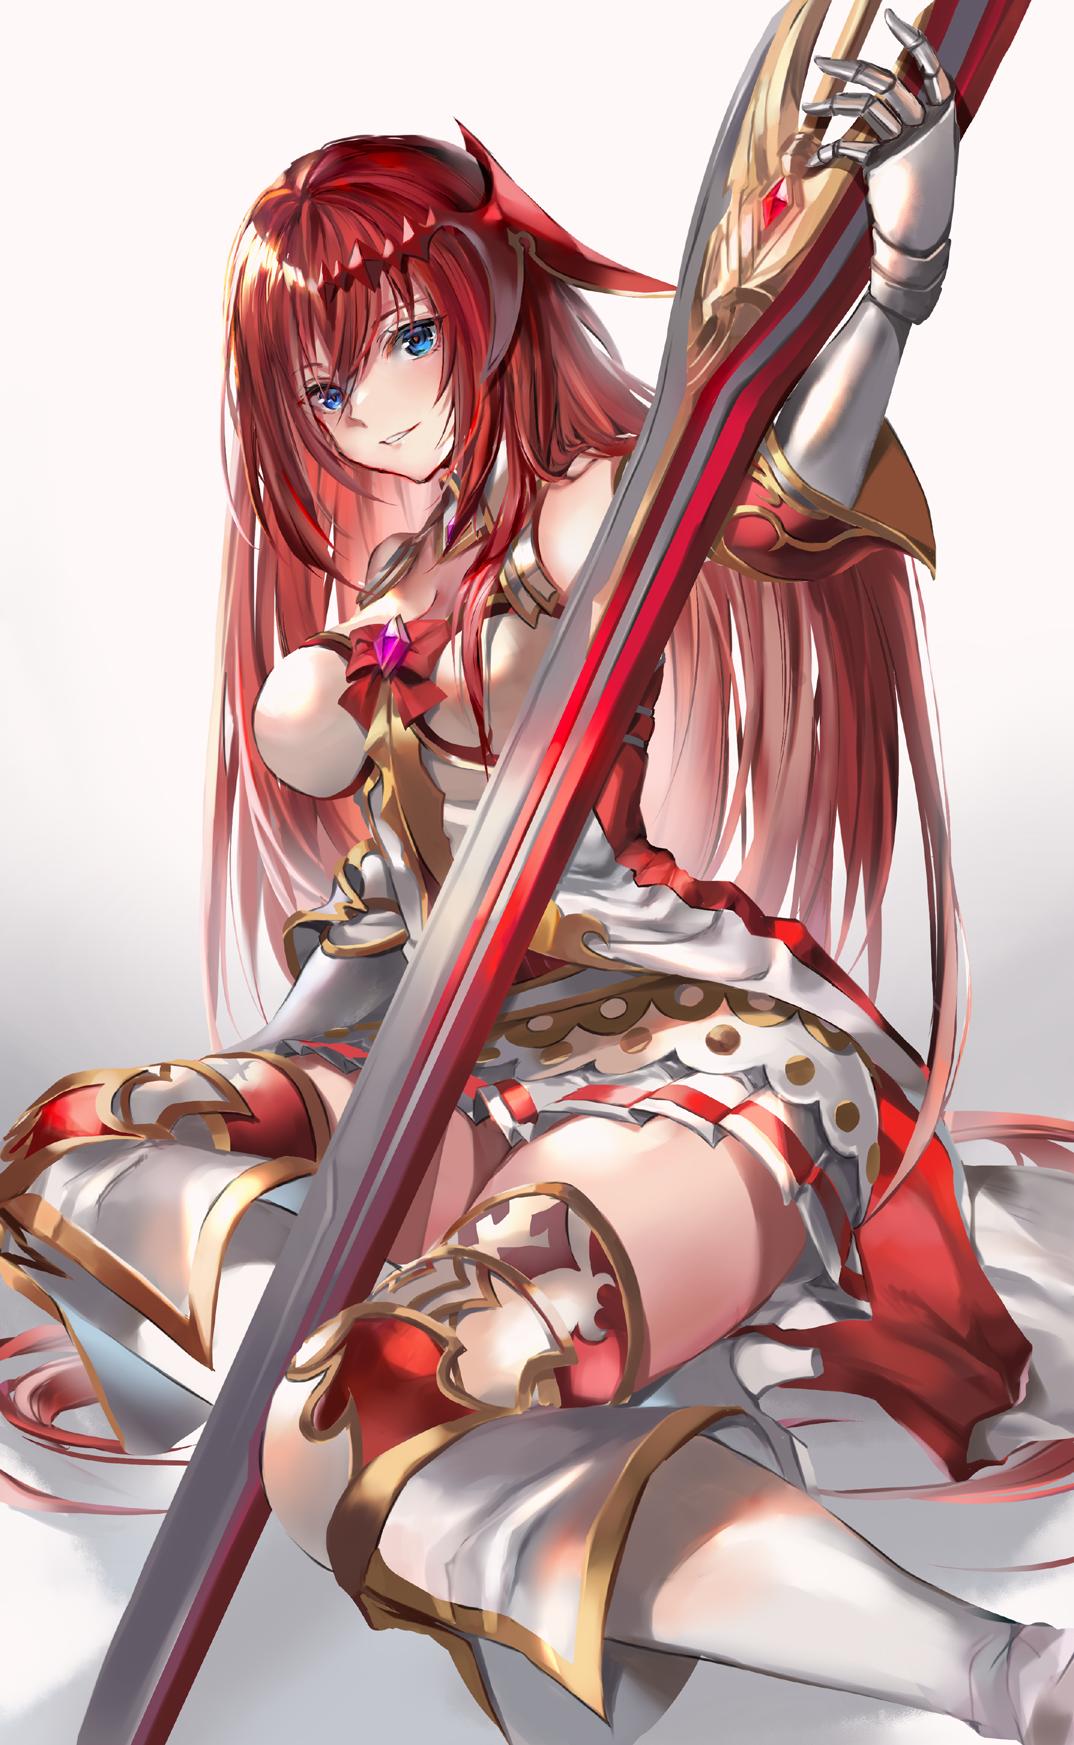 Knight girl Alexiel with sword: Granblue Fantasy (Artist: Hinahino)